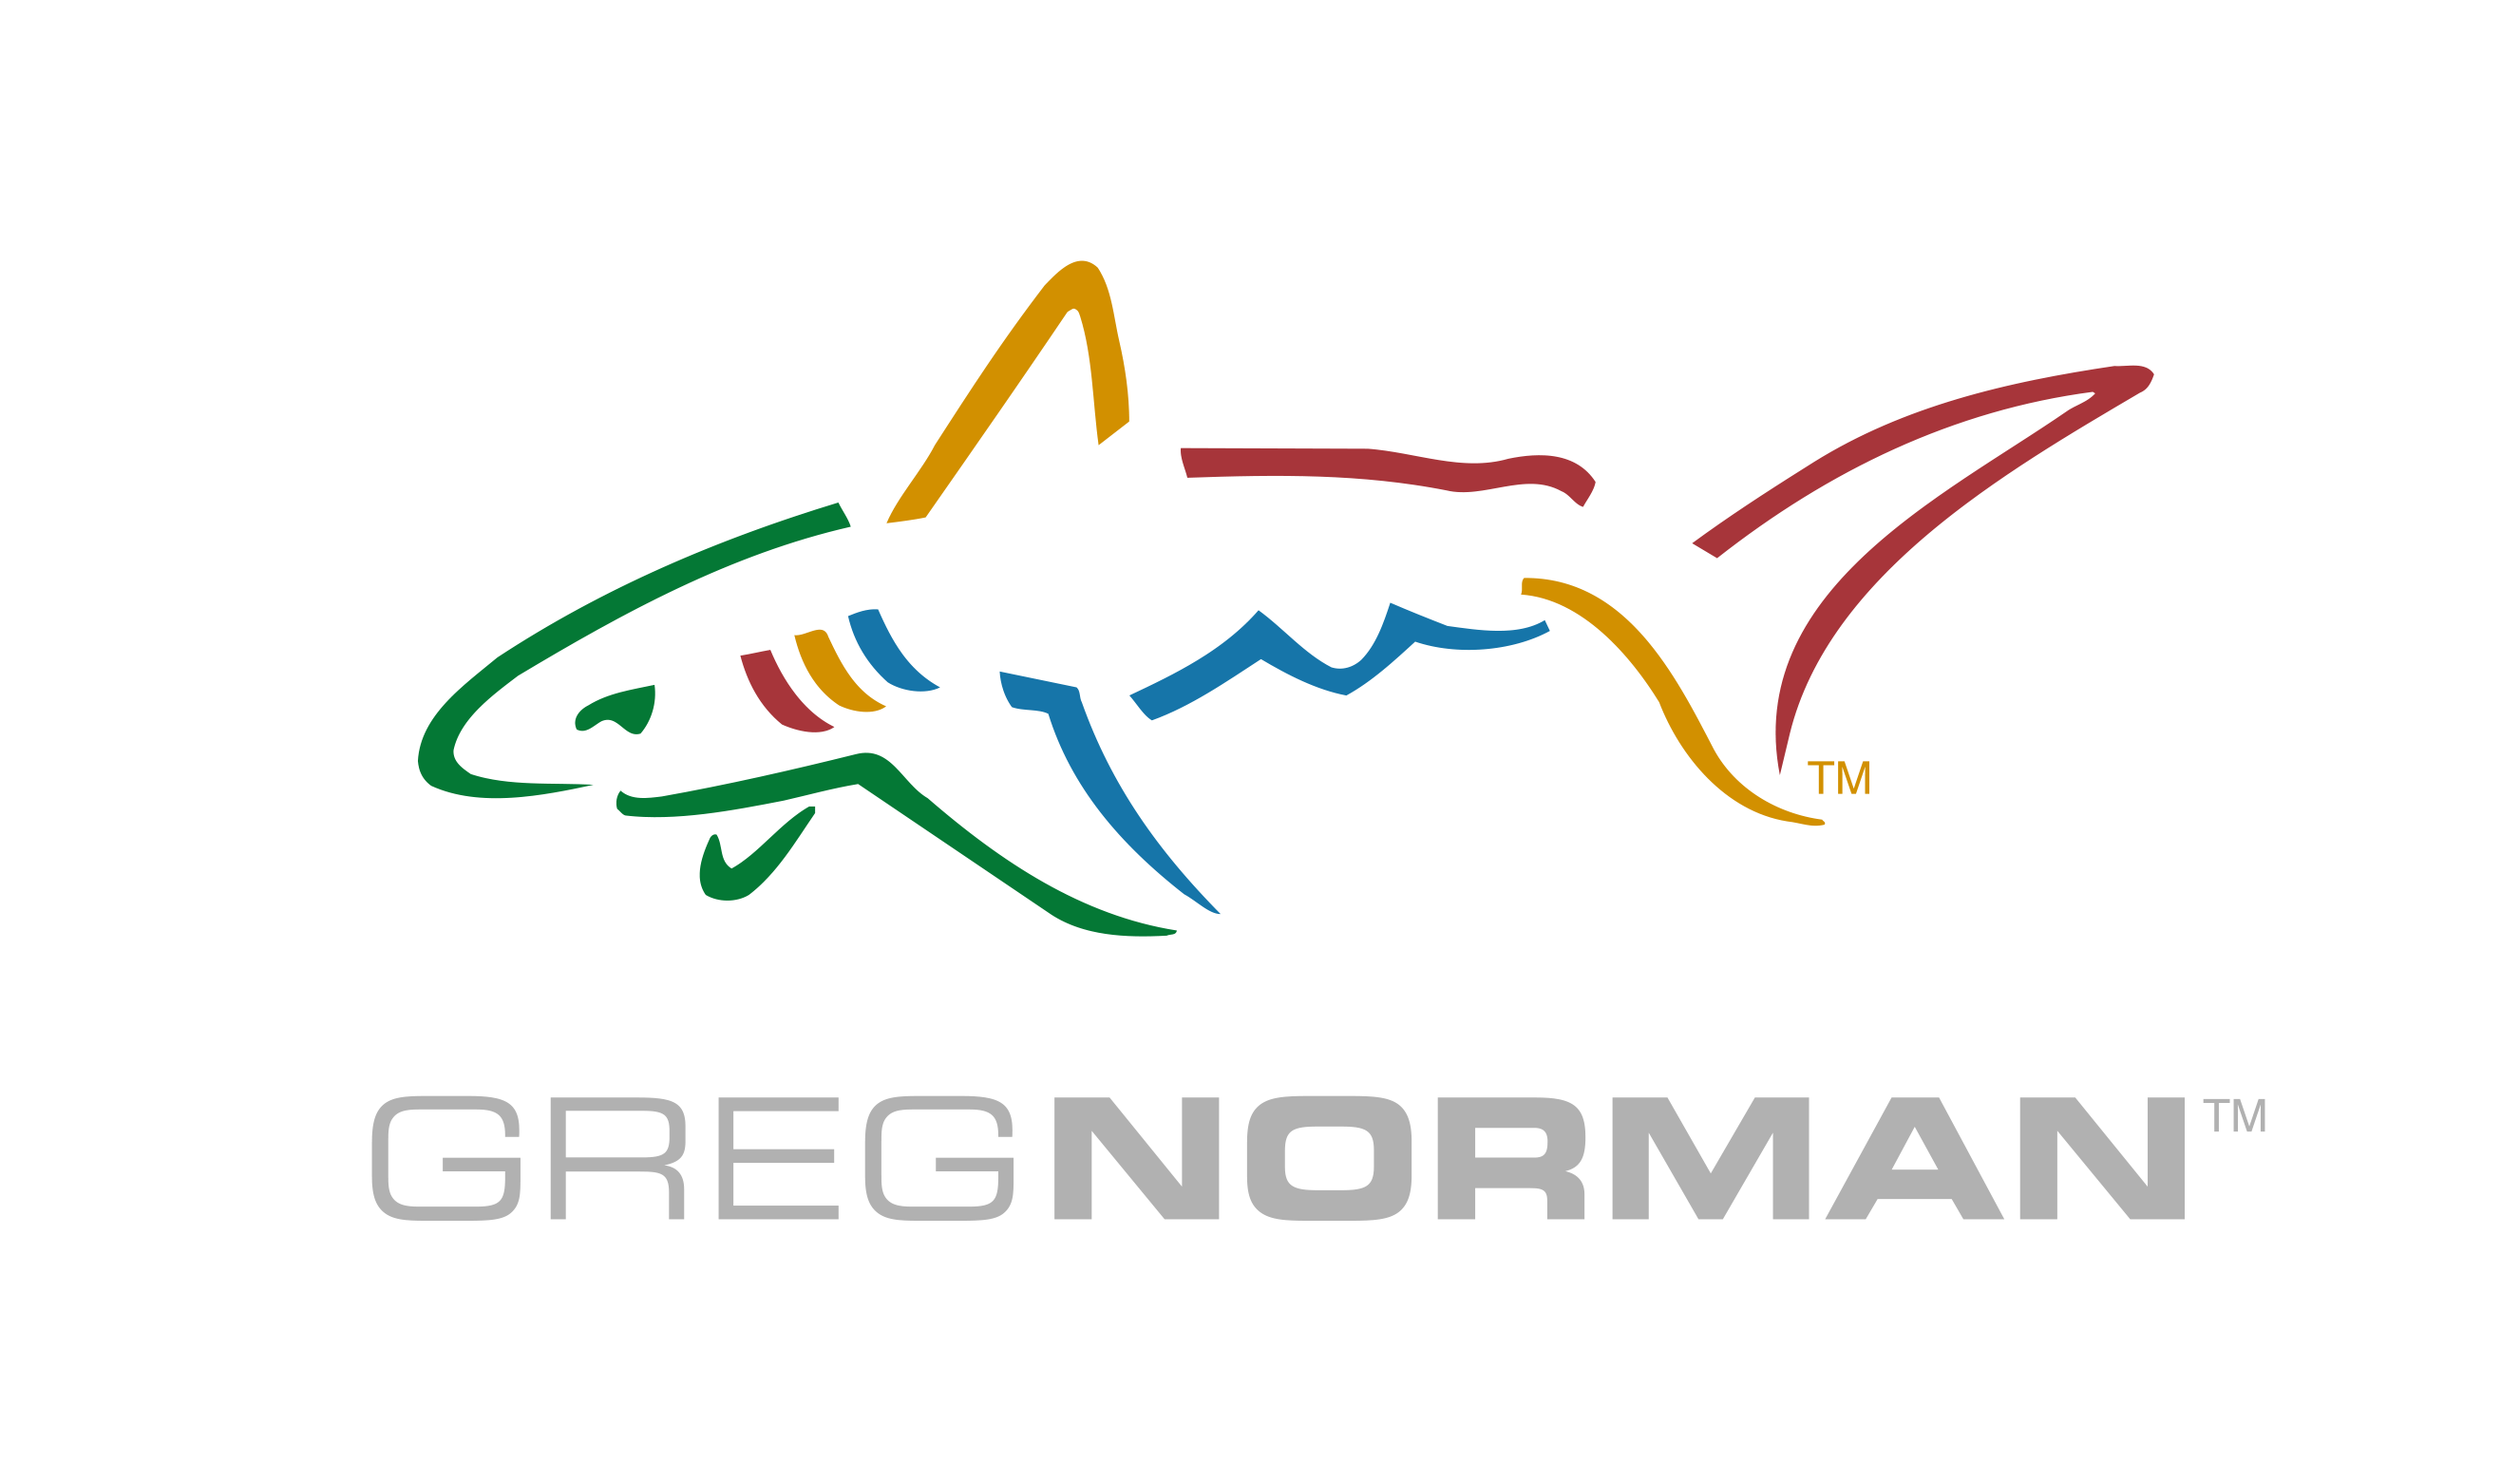 Greg Norman Shark Logo - Styles For You